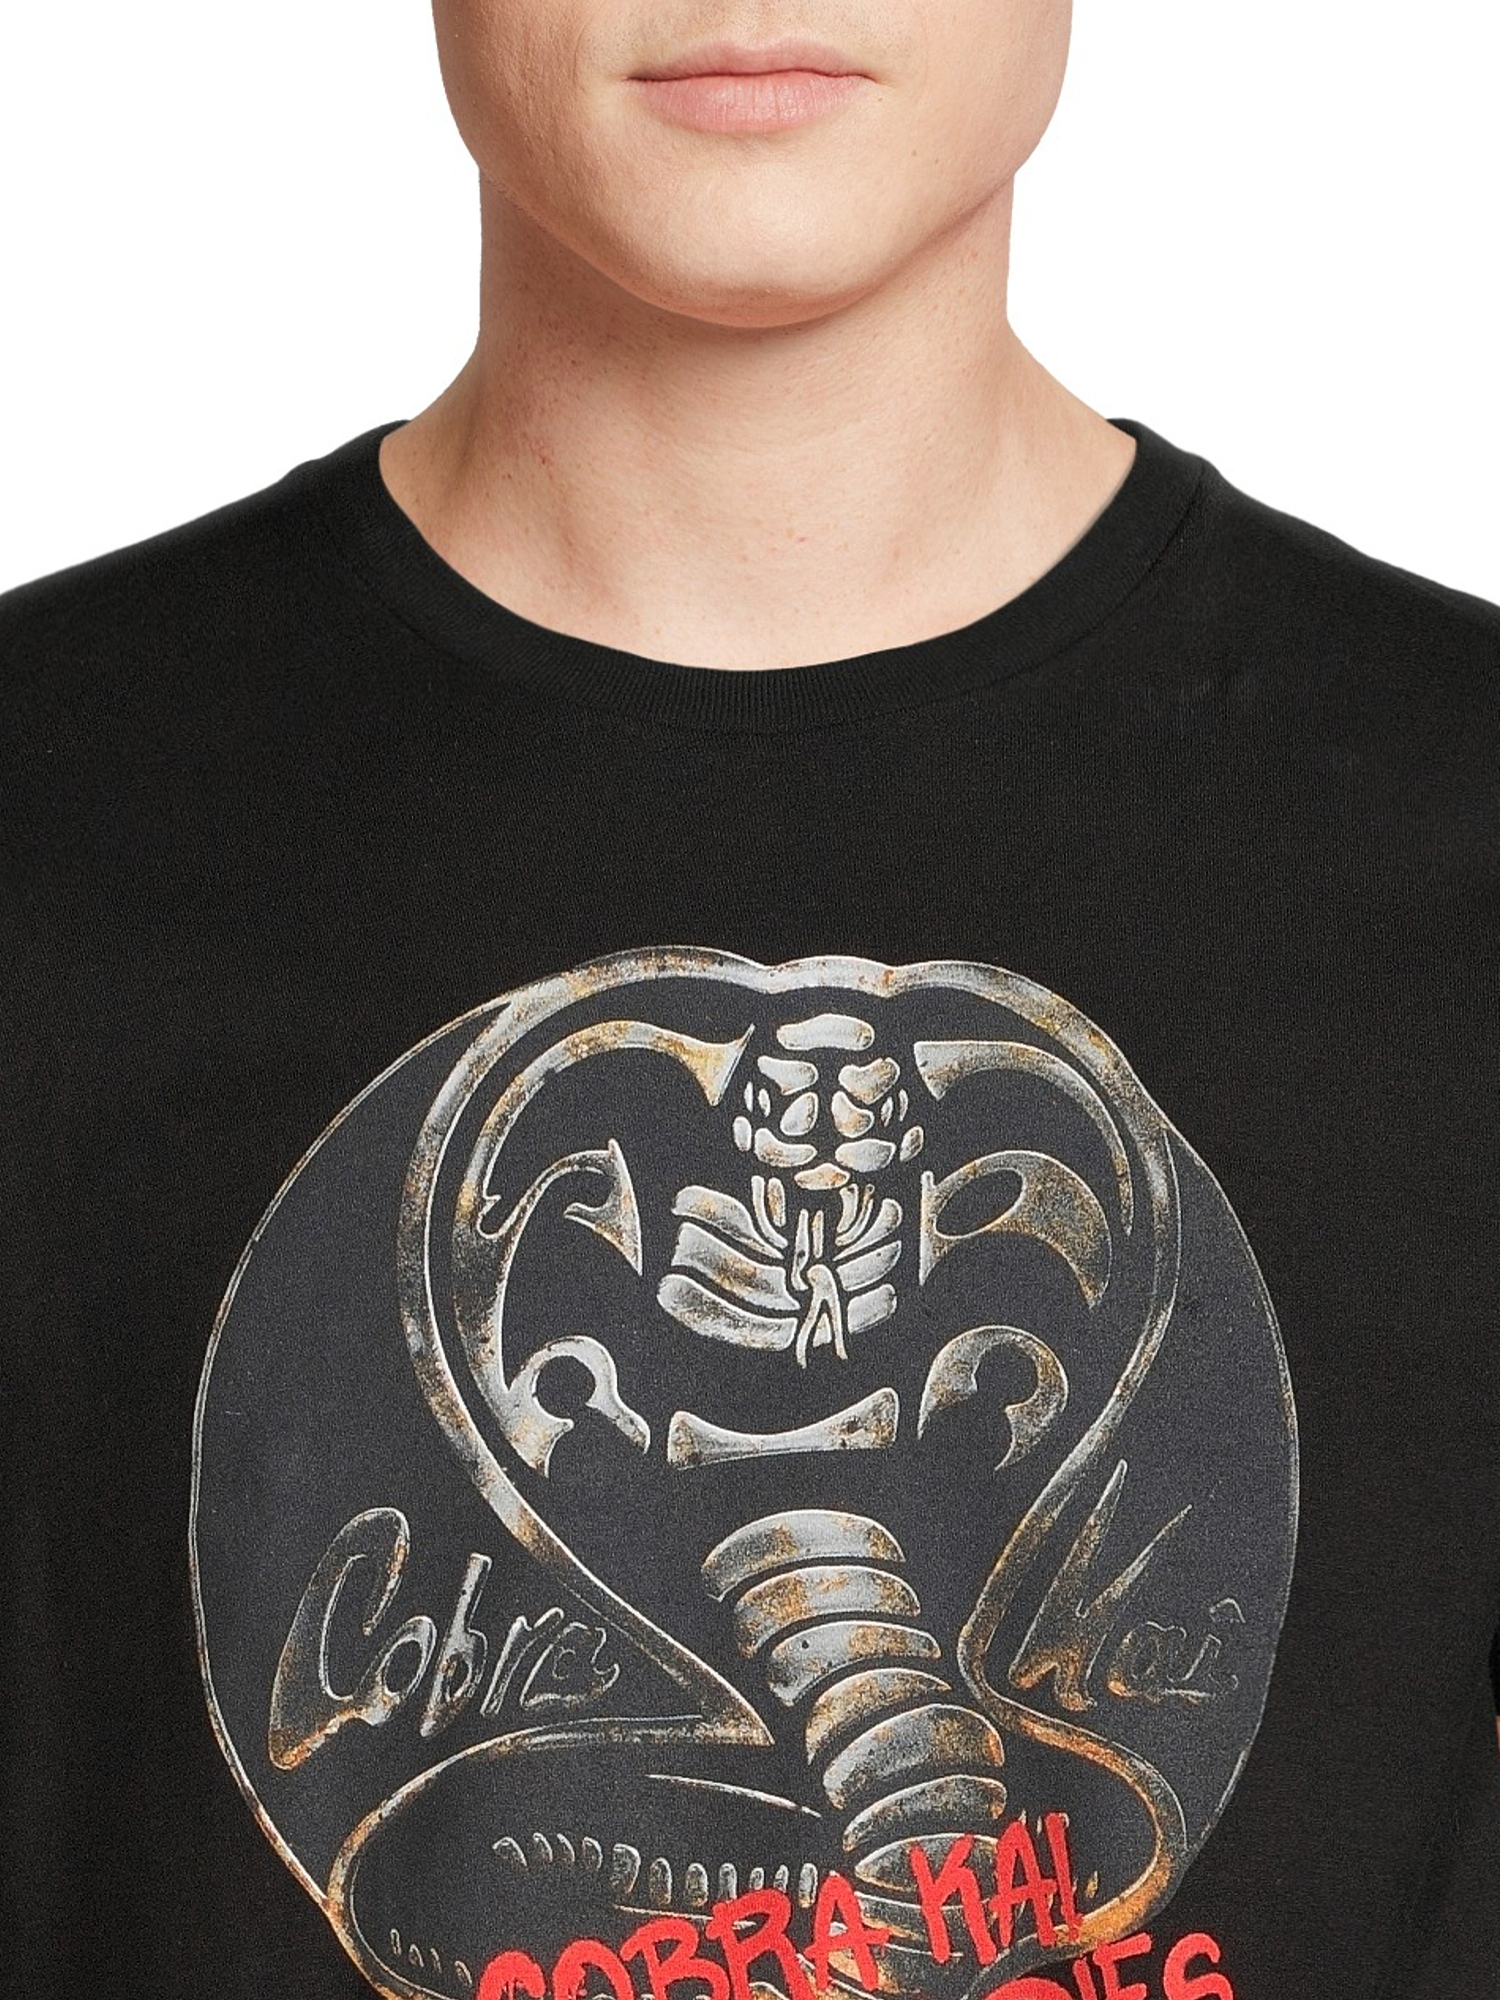 Cobra Kai Men's Cobra Kai Never Dies Short Sleeve T-Shirt, Sizes S-3XL - image 4 of 5